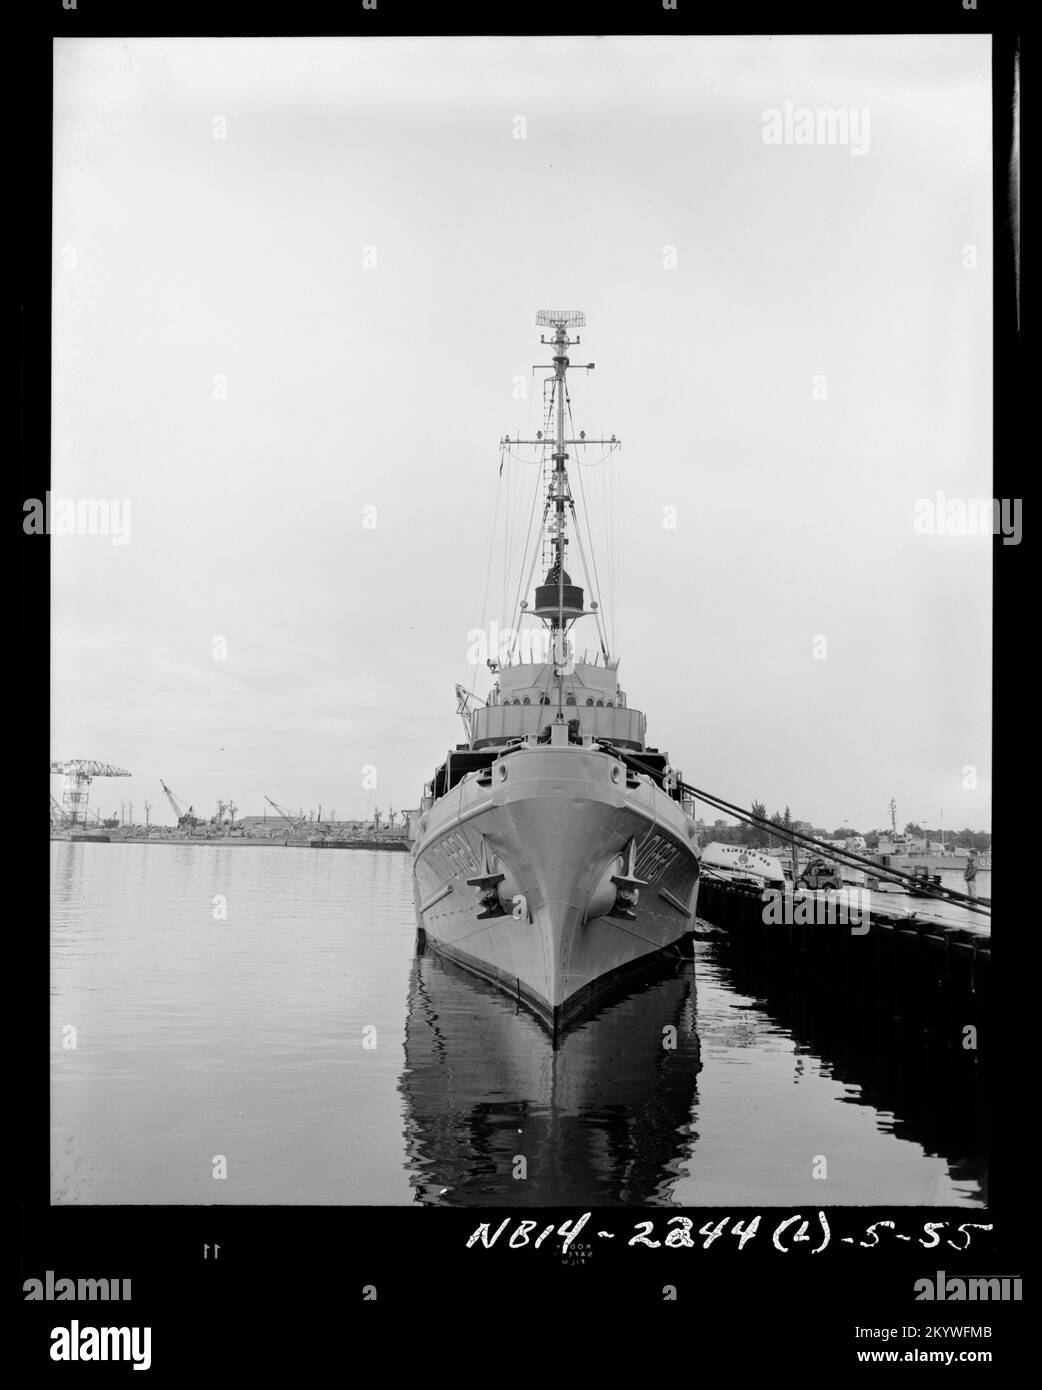 ASR-10 Greenlet , Ships, Naval Vessels, Boats, Naval History, Navy Stock Photo